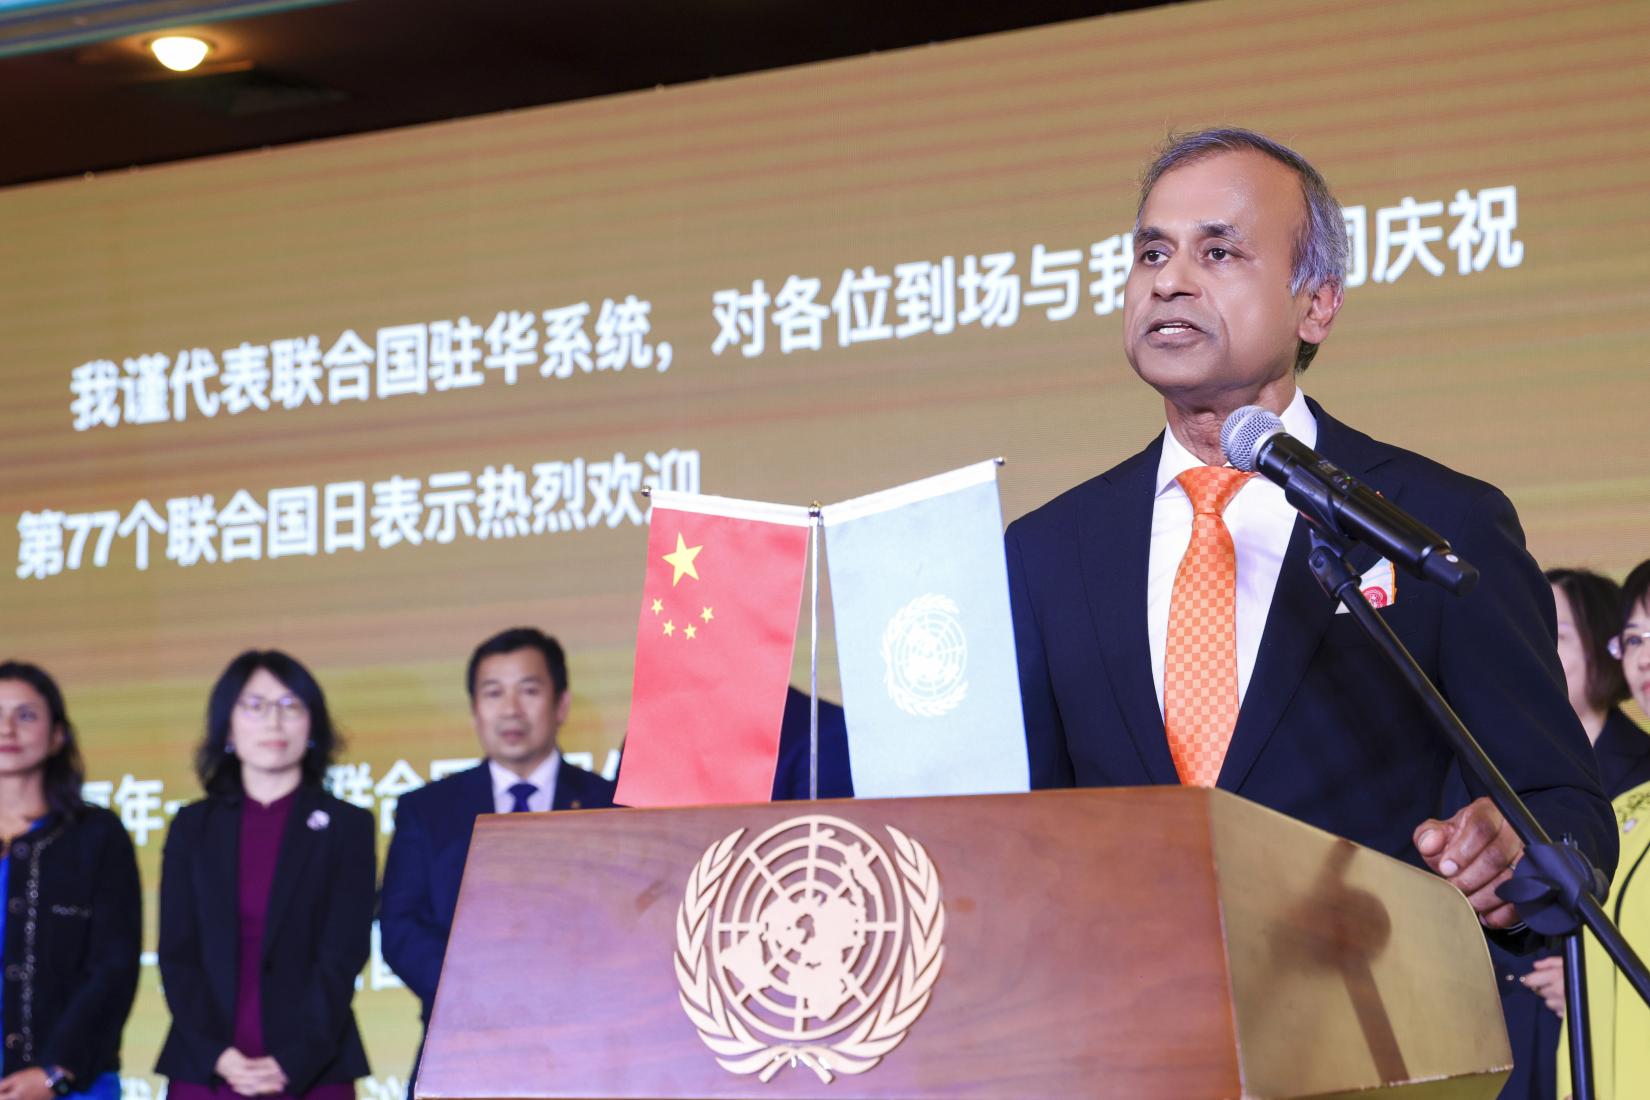 Siddharth Chatterjee, UN Development System Resident Coordinator in China